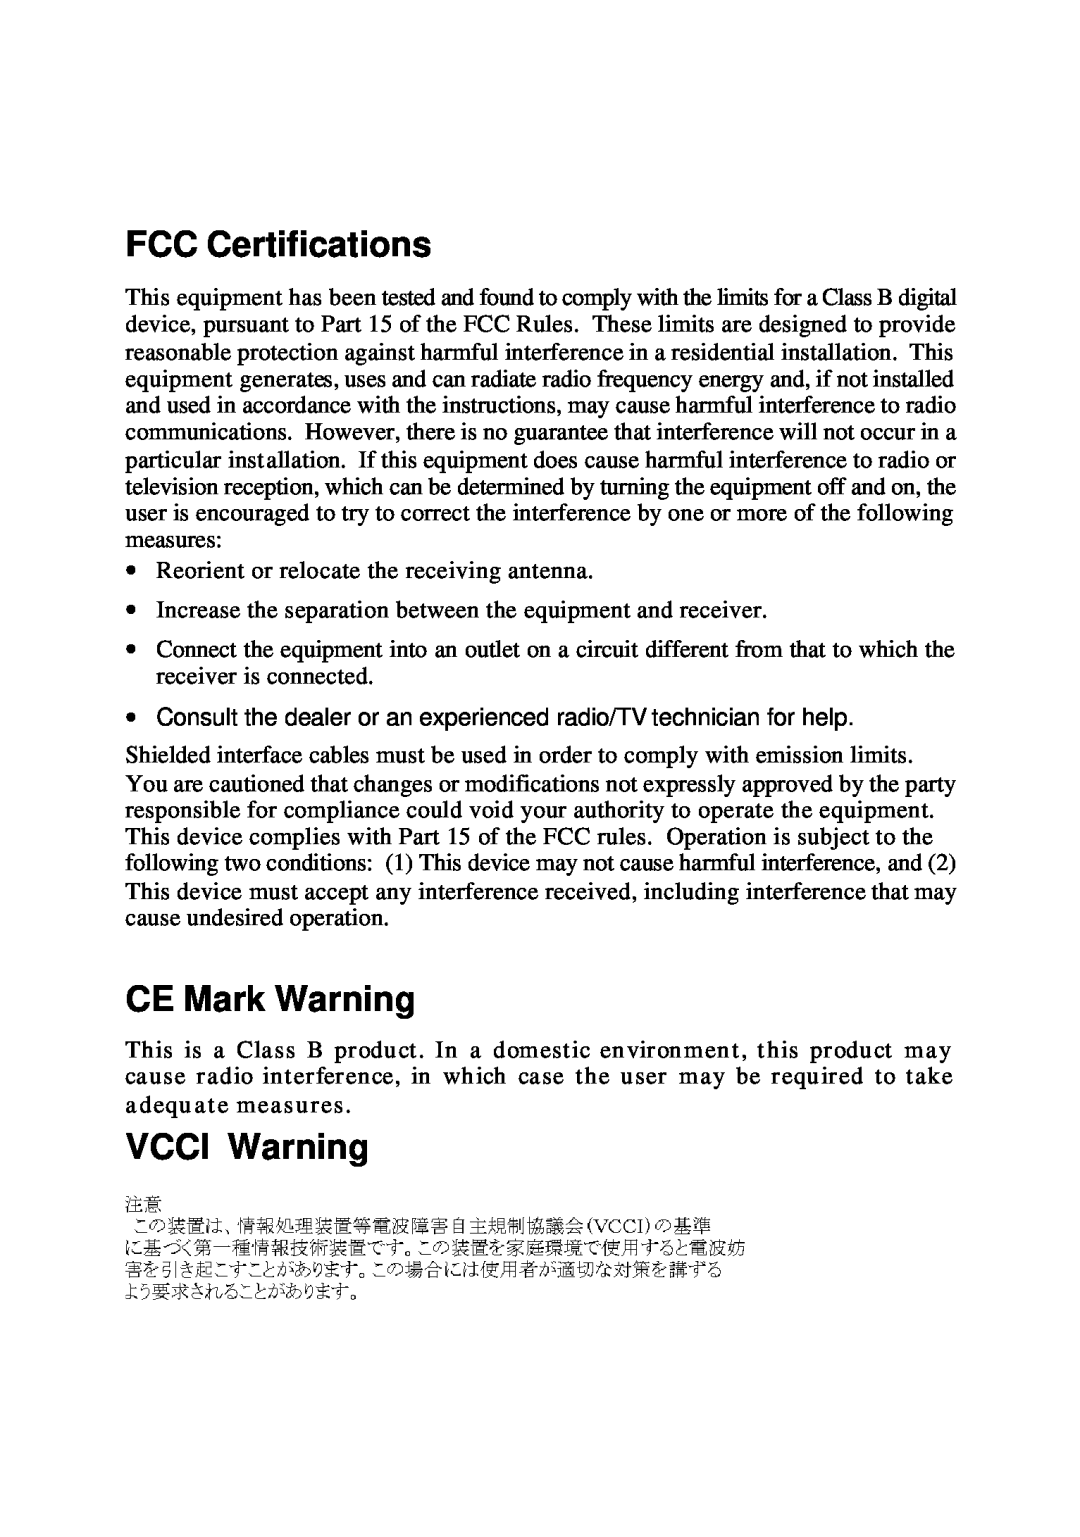 D-Link DES-1005D manual FCC Certifications, CE Mark Warning, VCCI Warning 